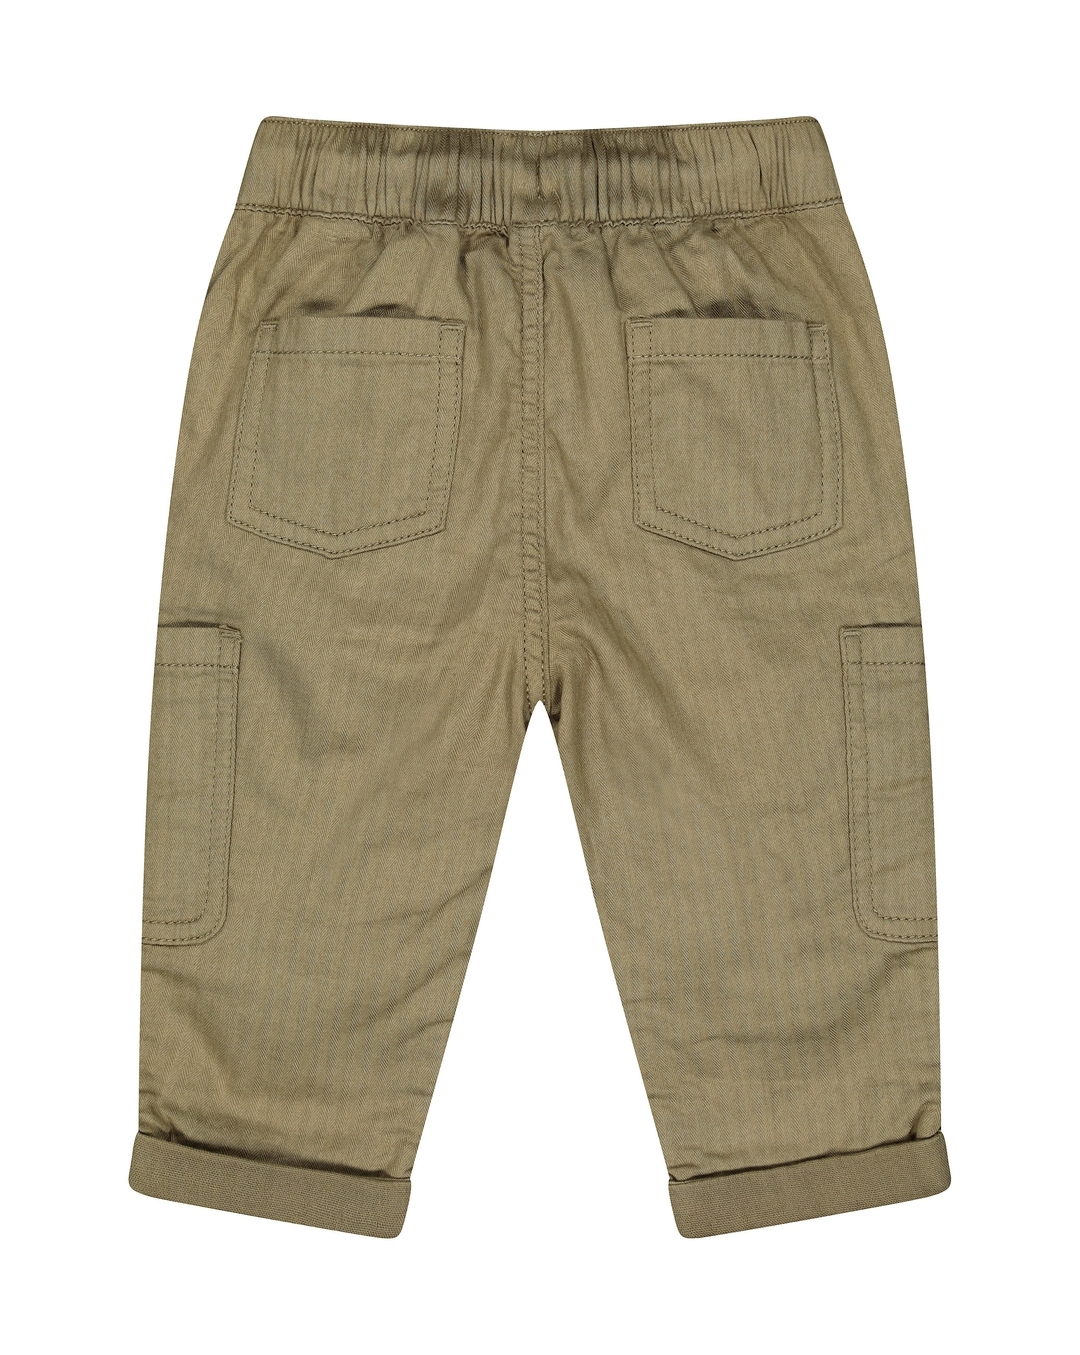 21 Best Olive green cargo pants ideas  mens outfits olive green cargo  pants green cargo pants